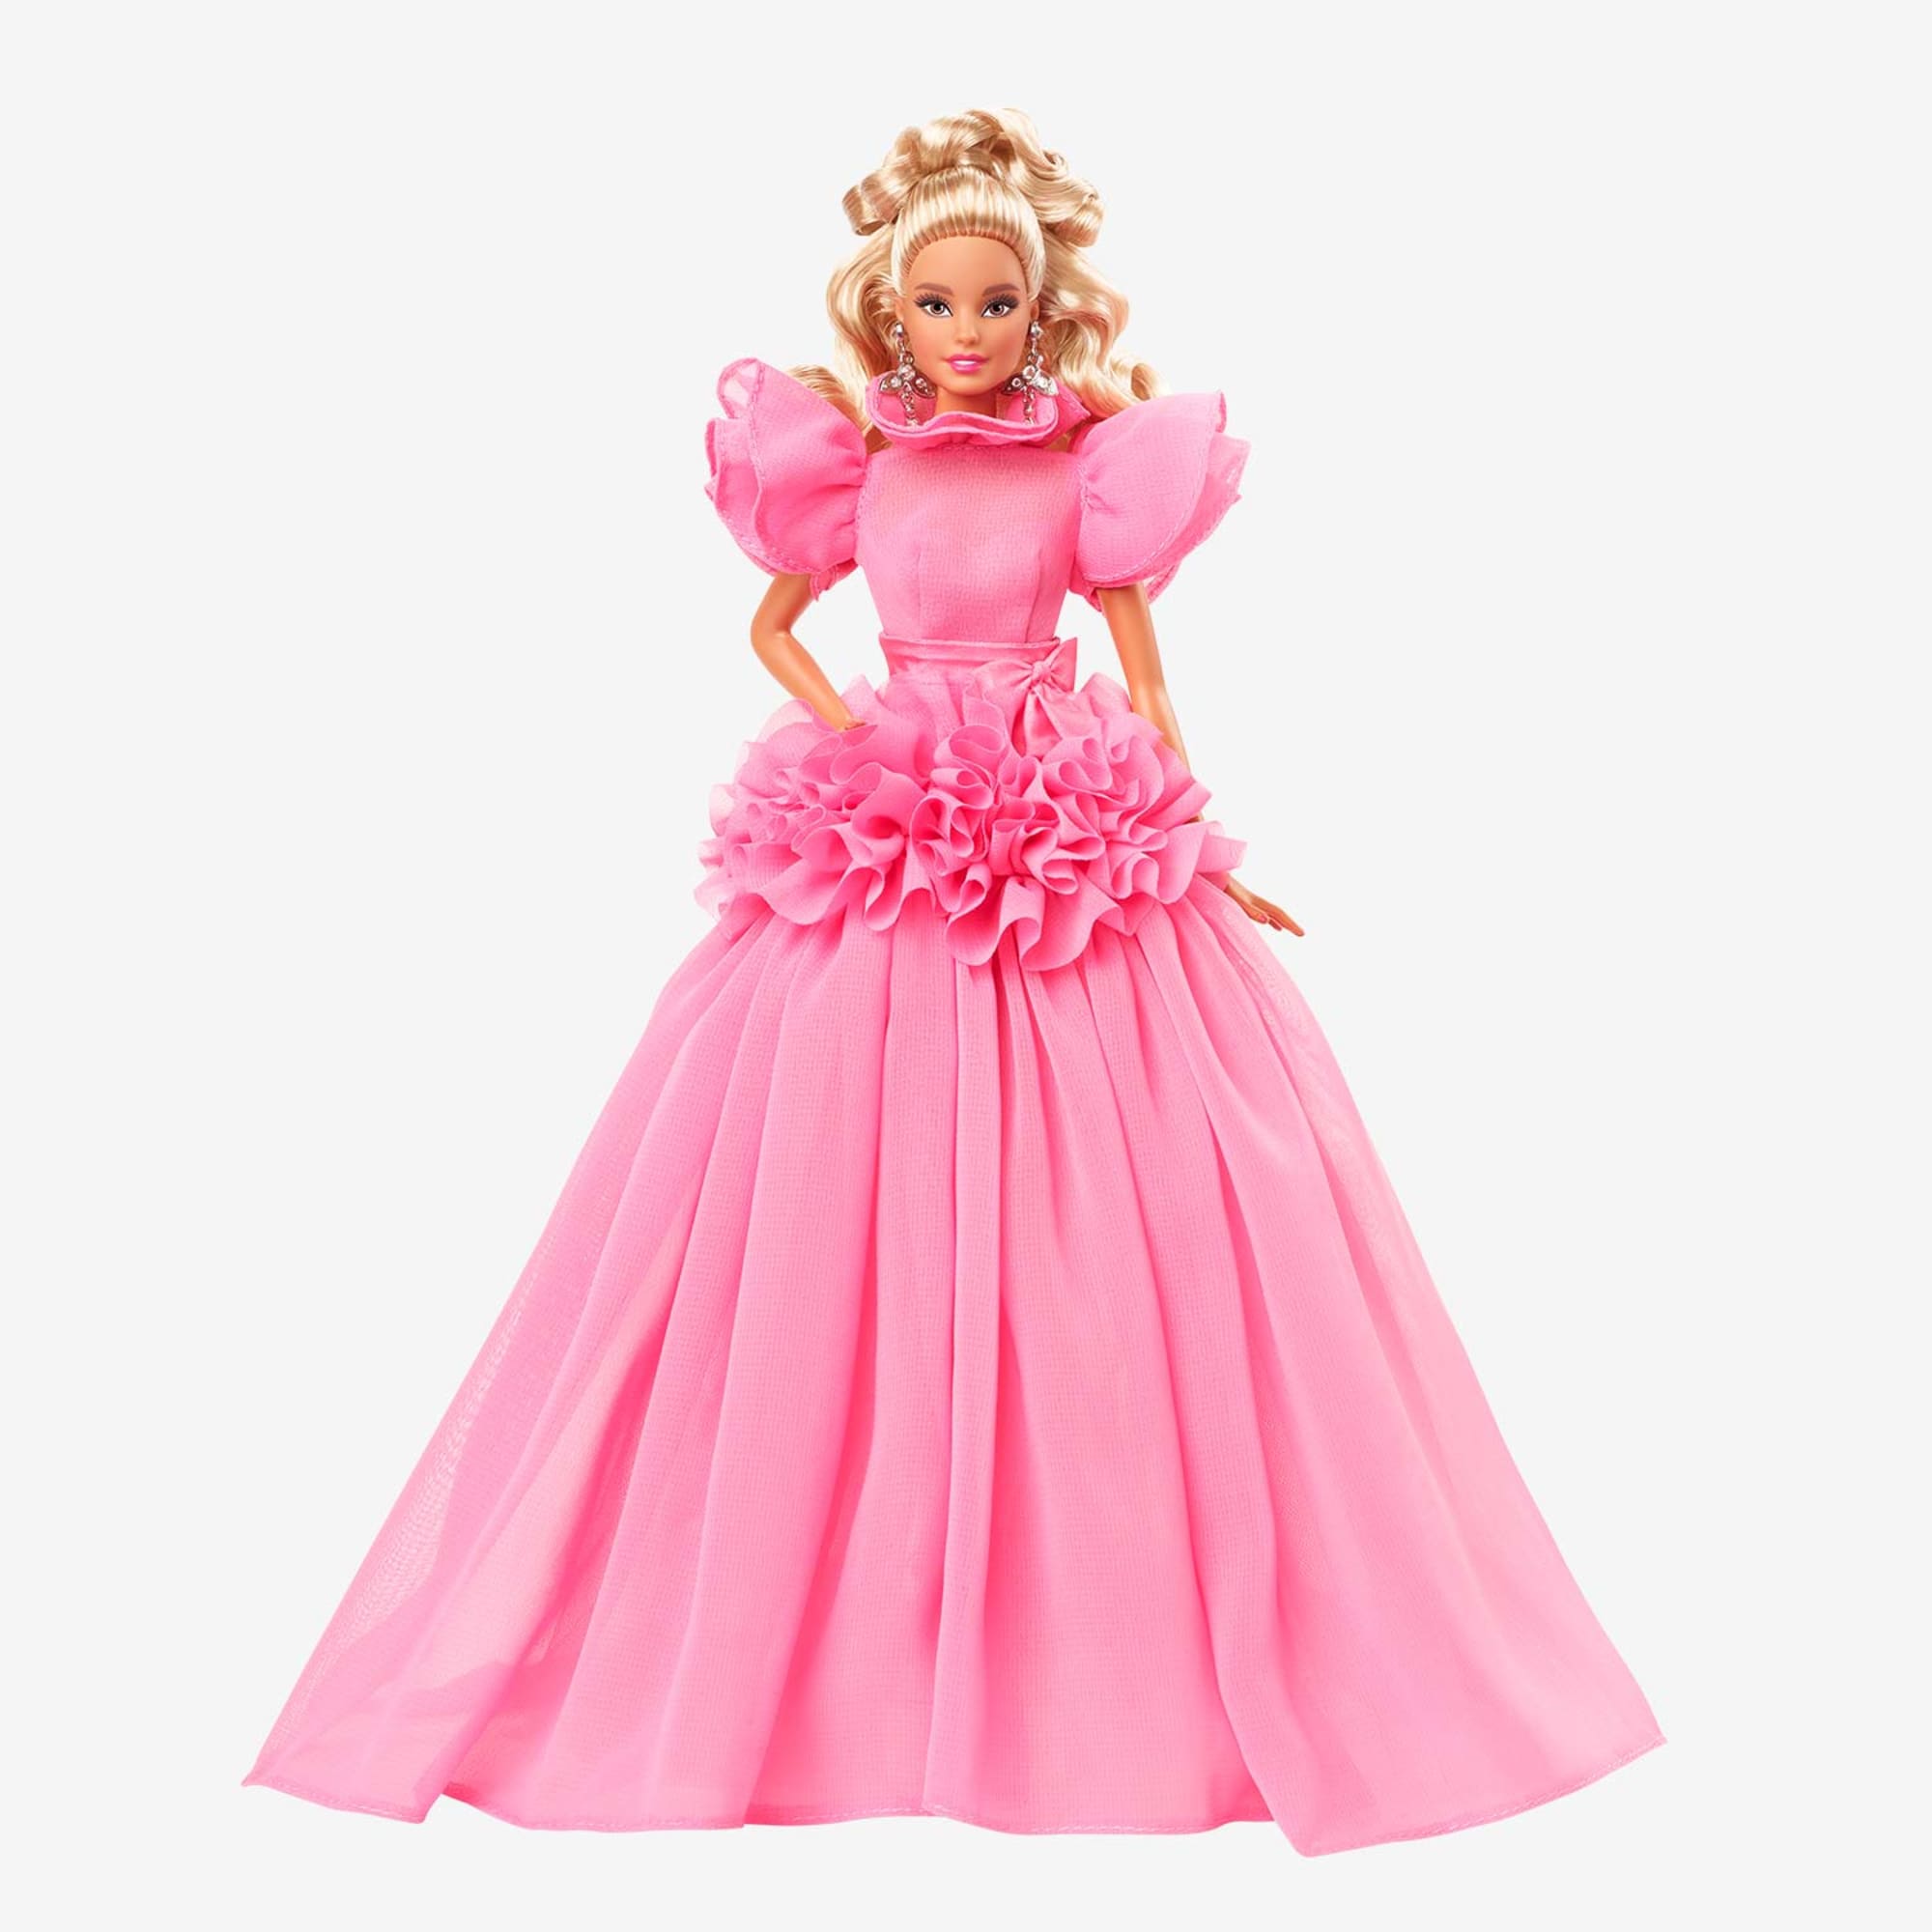 Barbie Pink Collection Doll | vlr.eng.br